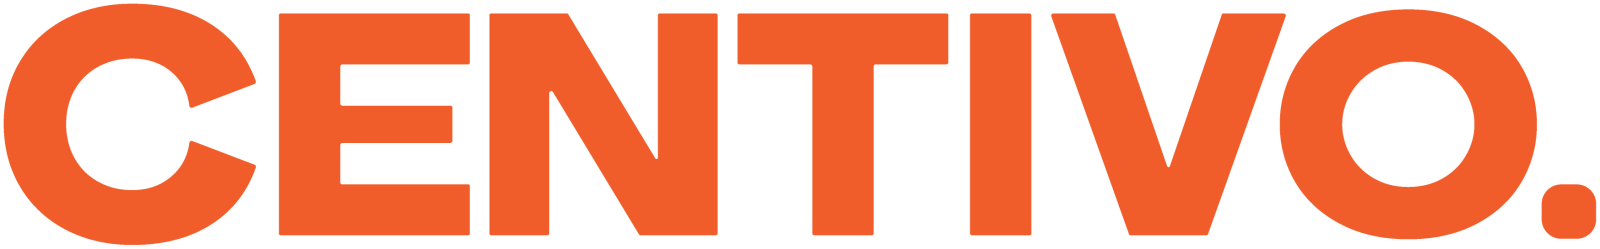 Centivo-Logo-Orange PNG (1)